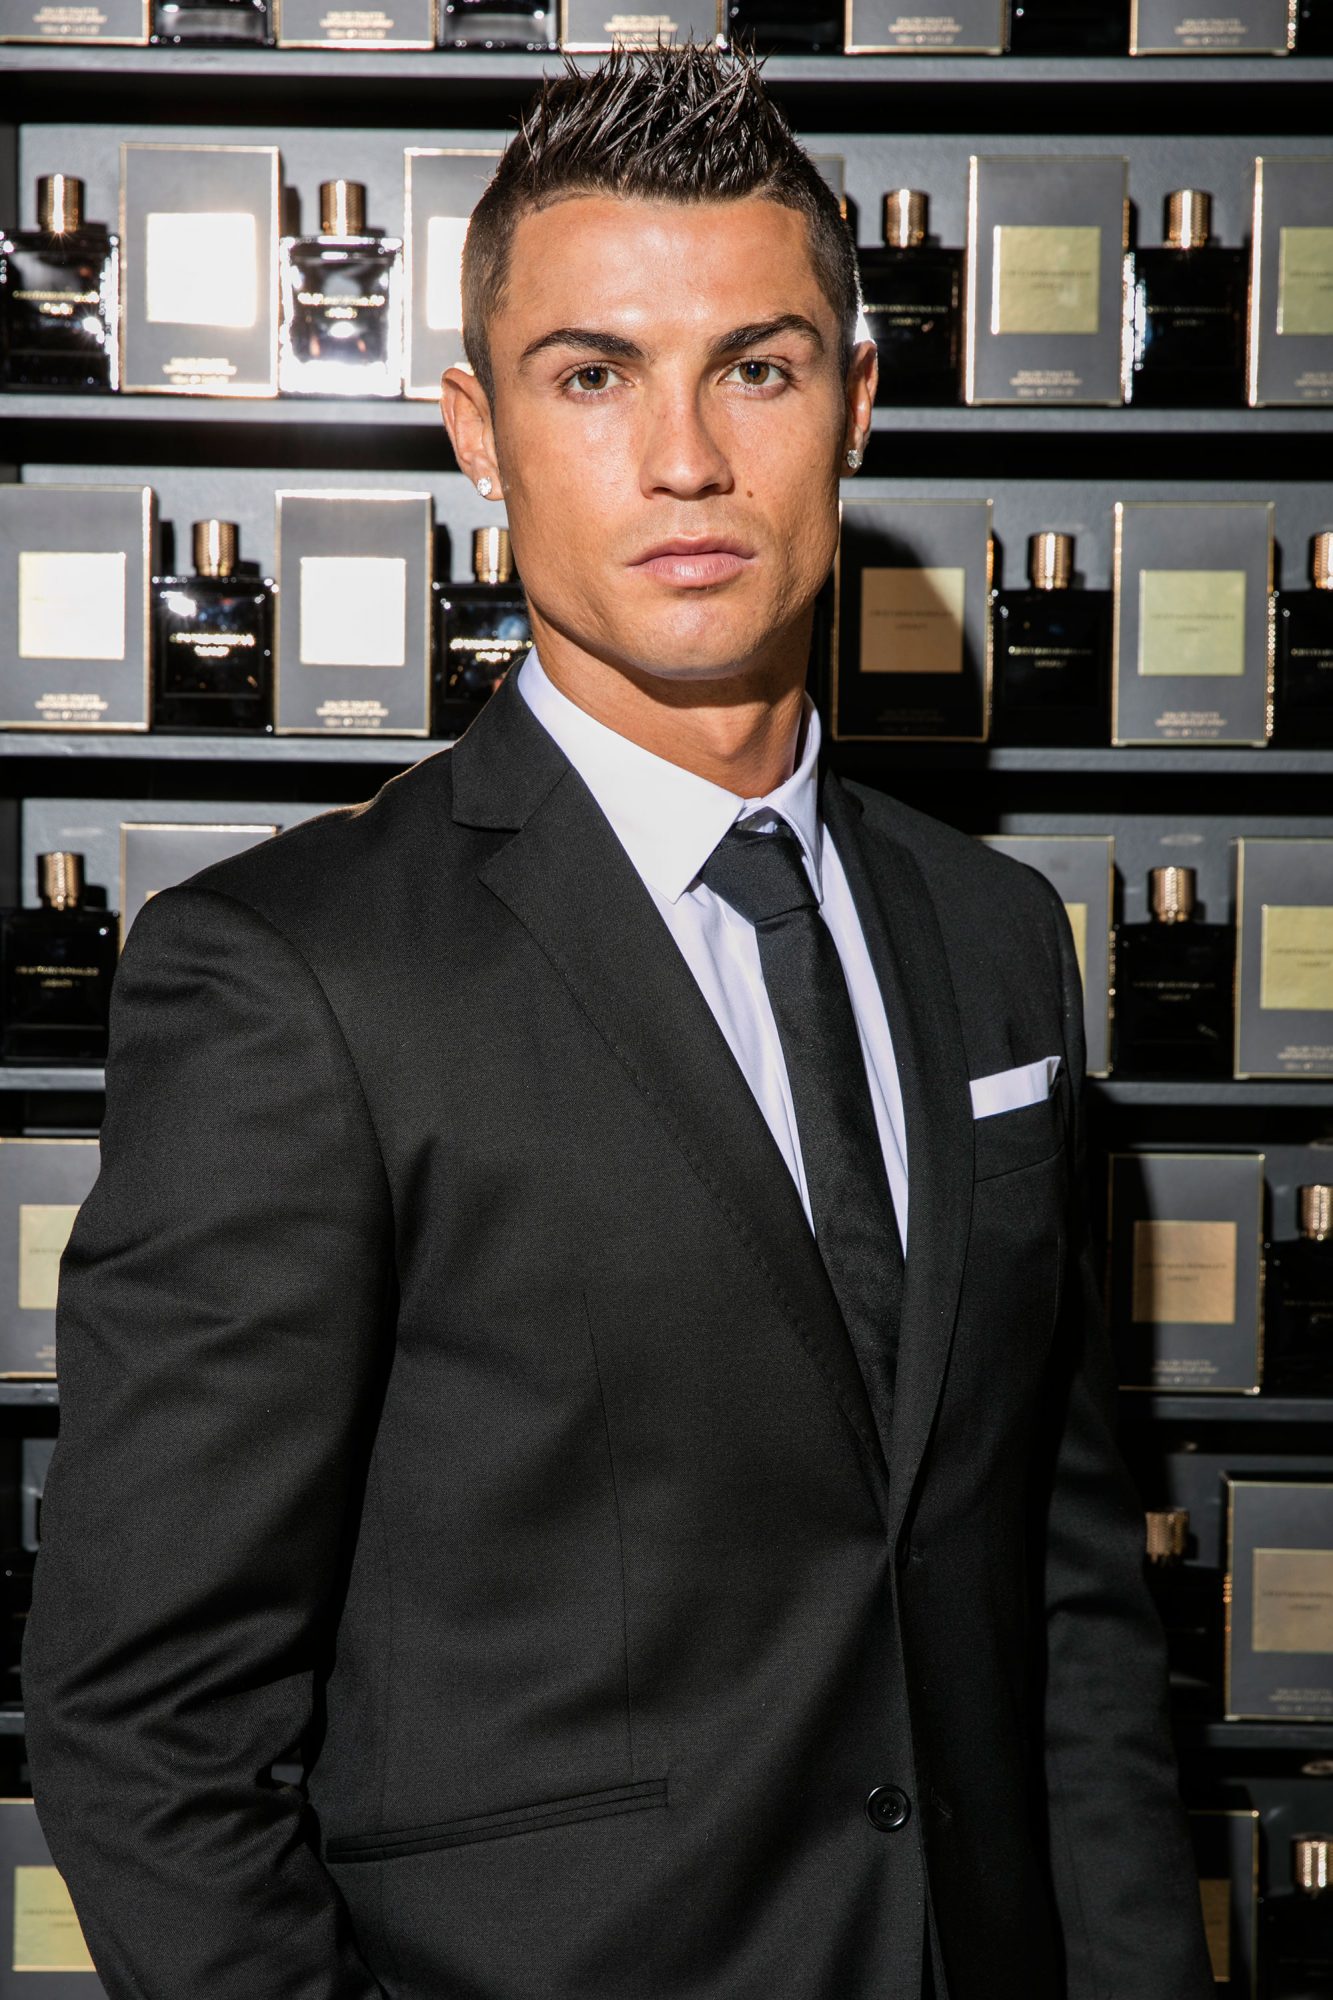 It's Cristiano Ronaldo's 32nd Birthday!